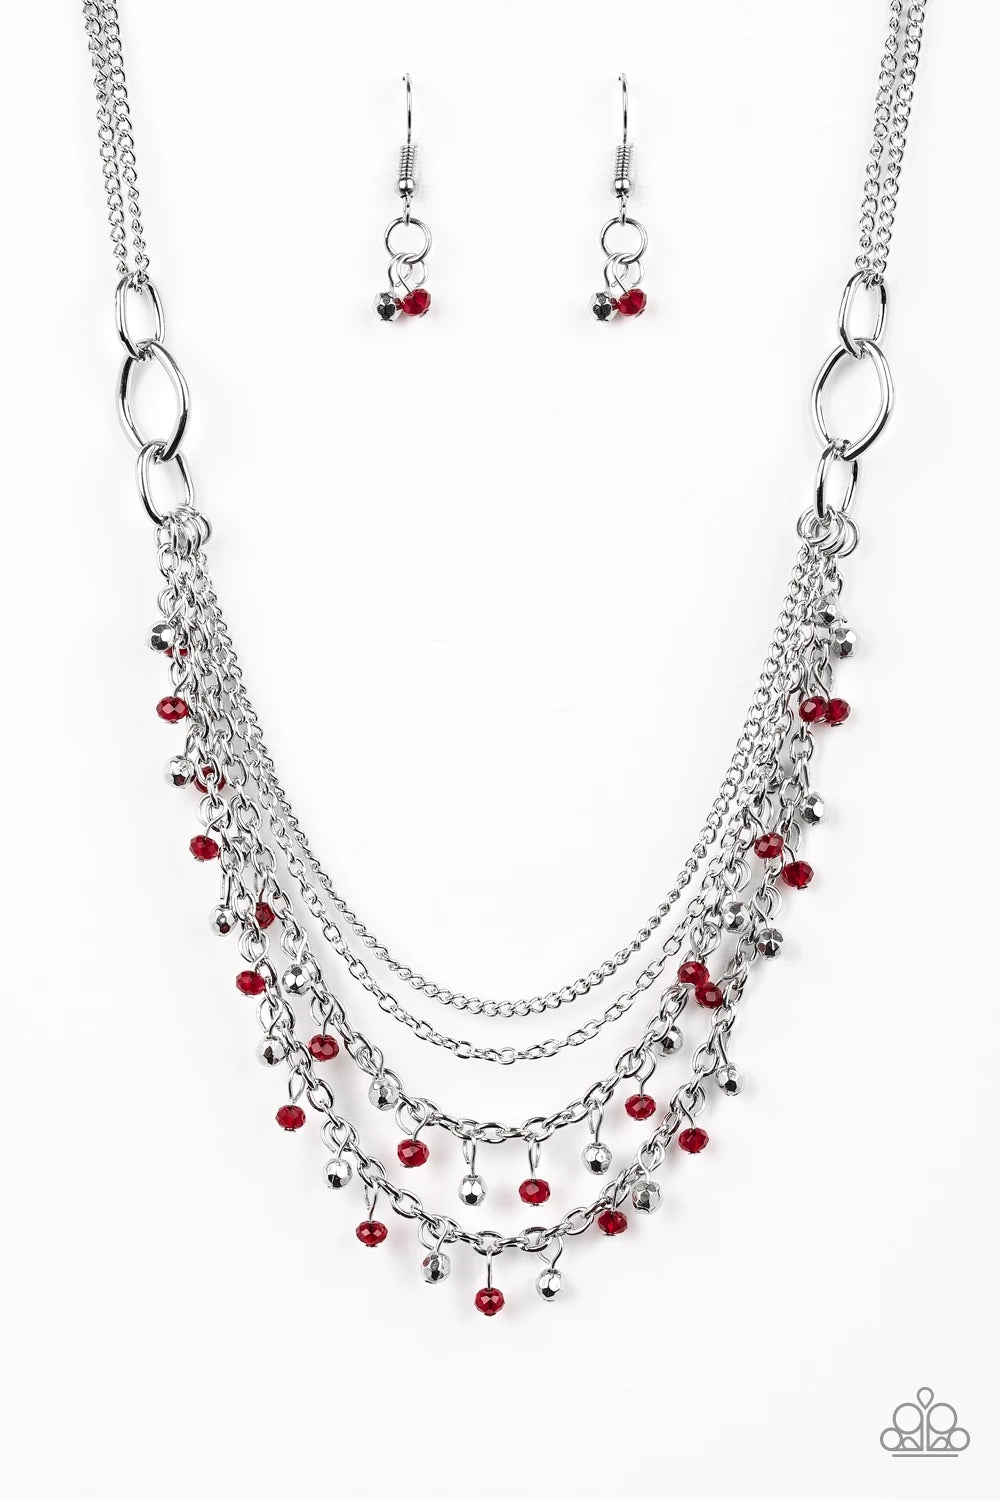 Financially Fabulous Red Necklace freeshipping - JewLz4u Gemstone Gallery